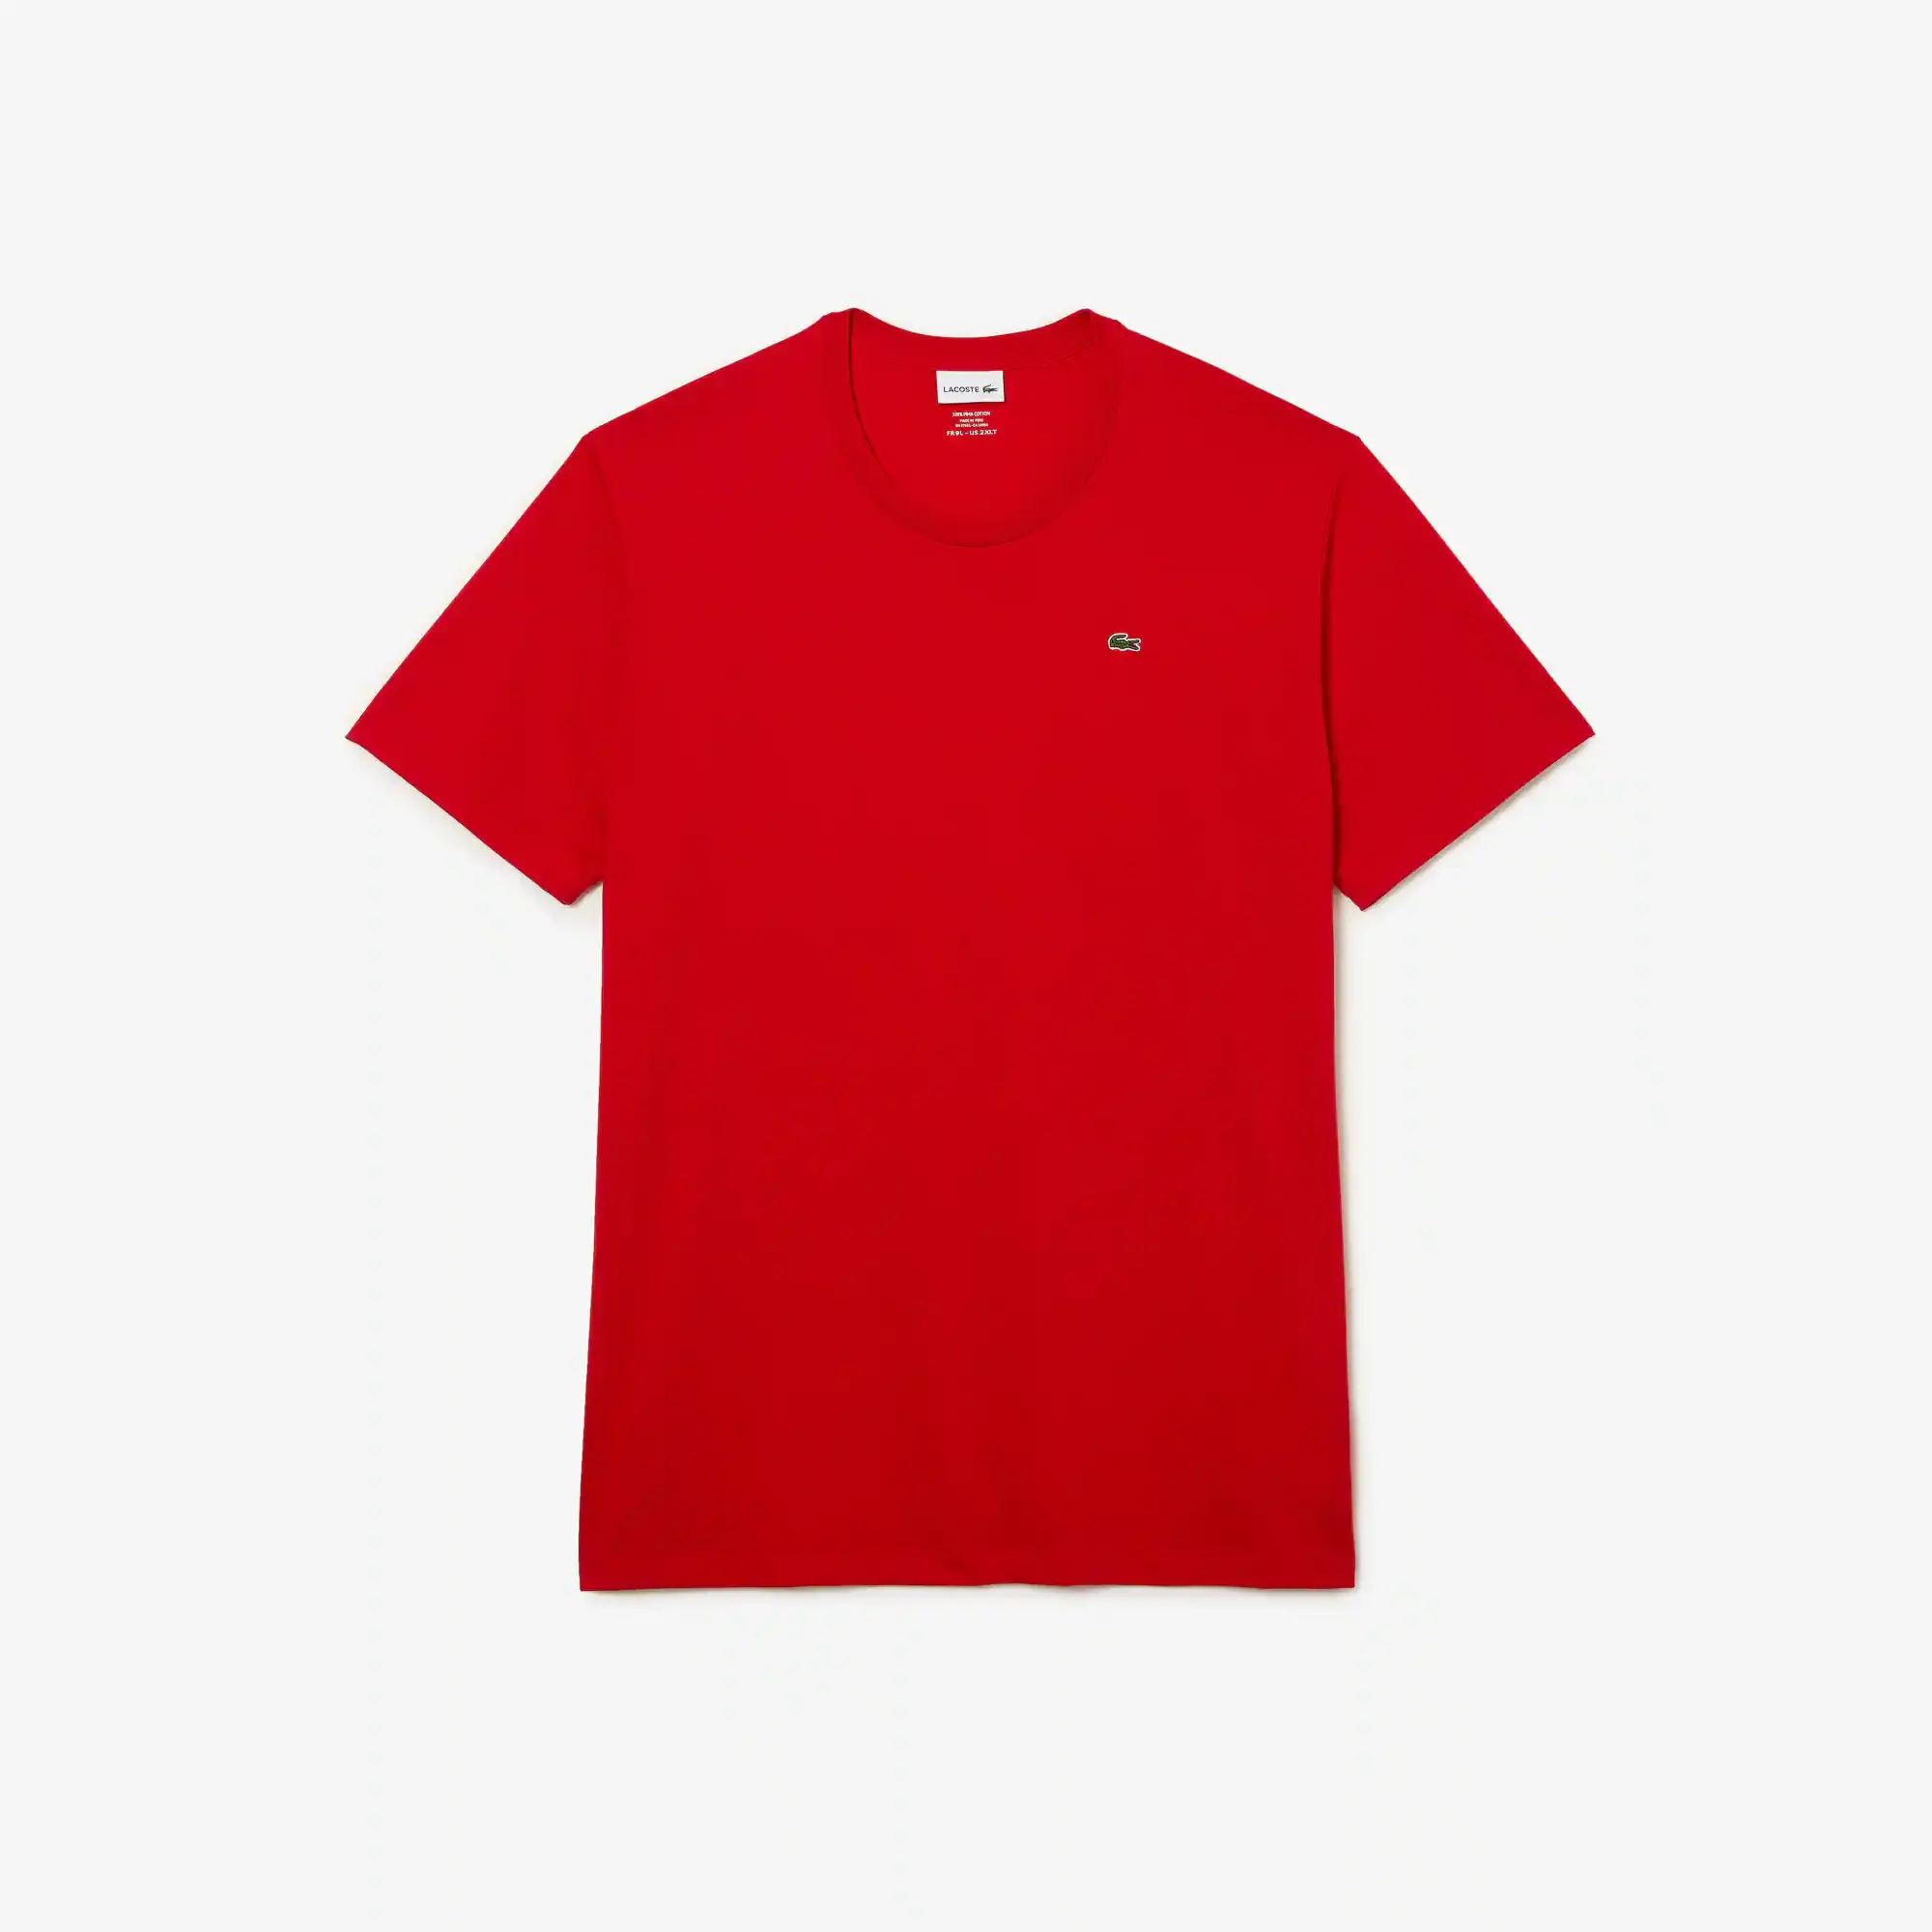 Lacoste Men's Tall Fit Pima Cotton Jersey T-Shirt. 2